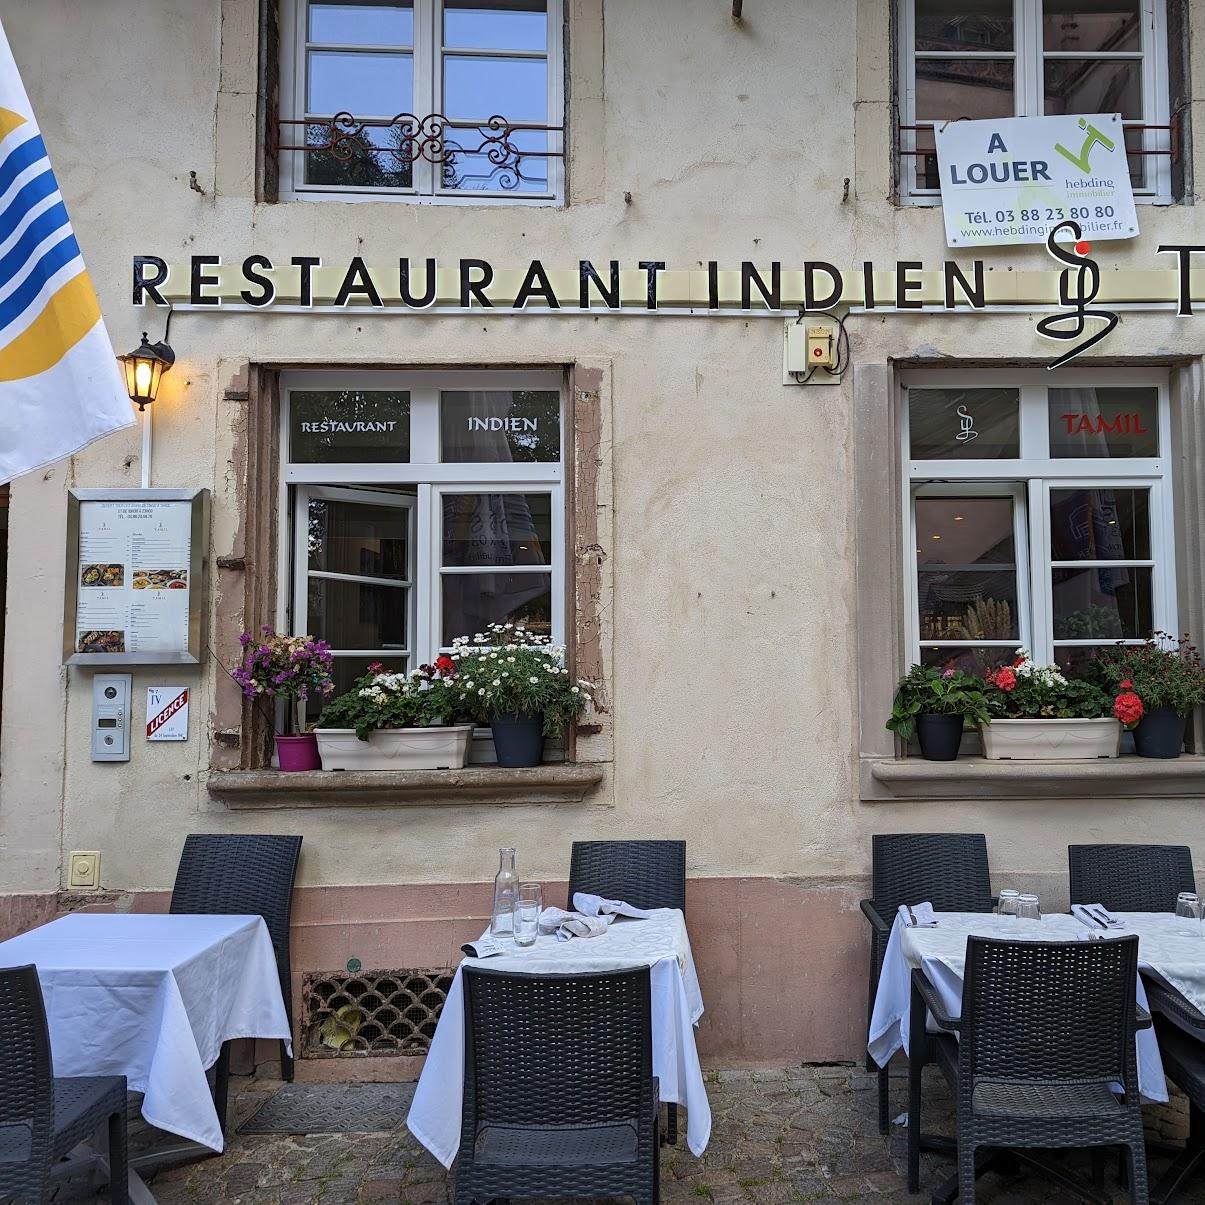 Restaurant "Tamil Restaurant" in Strasbourg